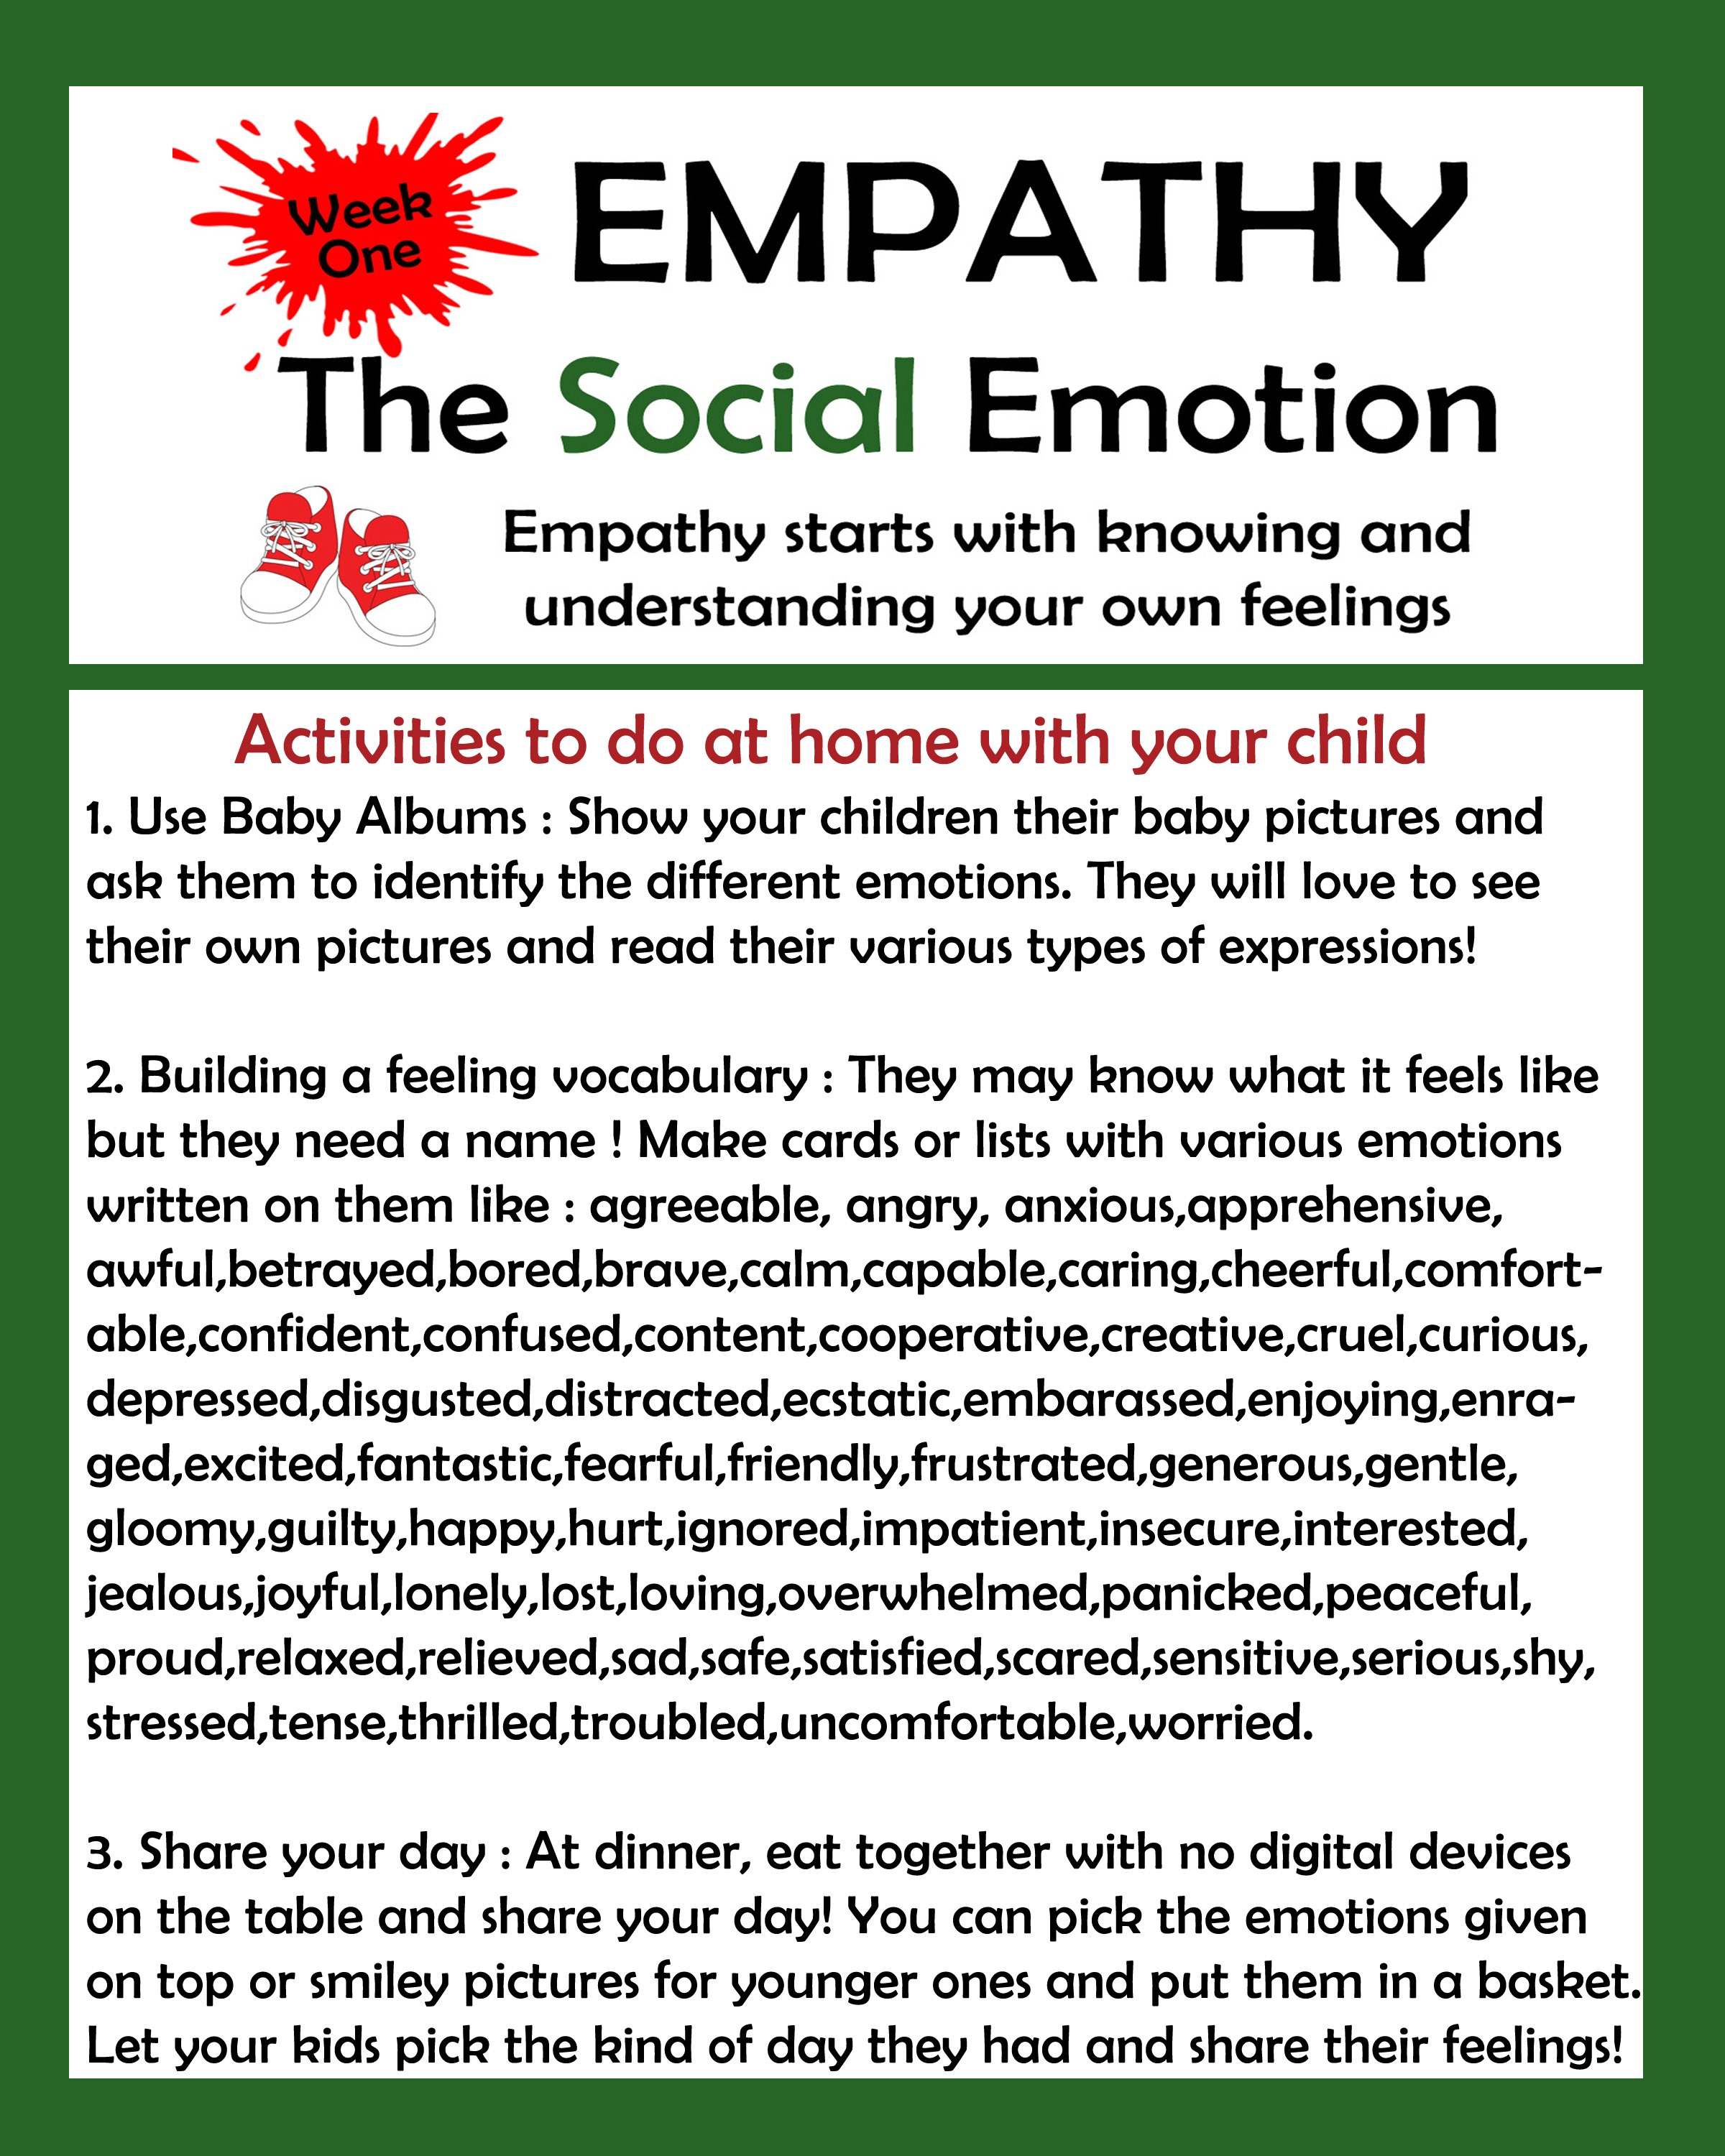 Empathy- The Social Emotion